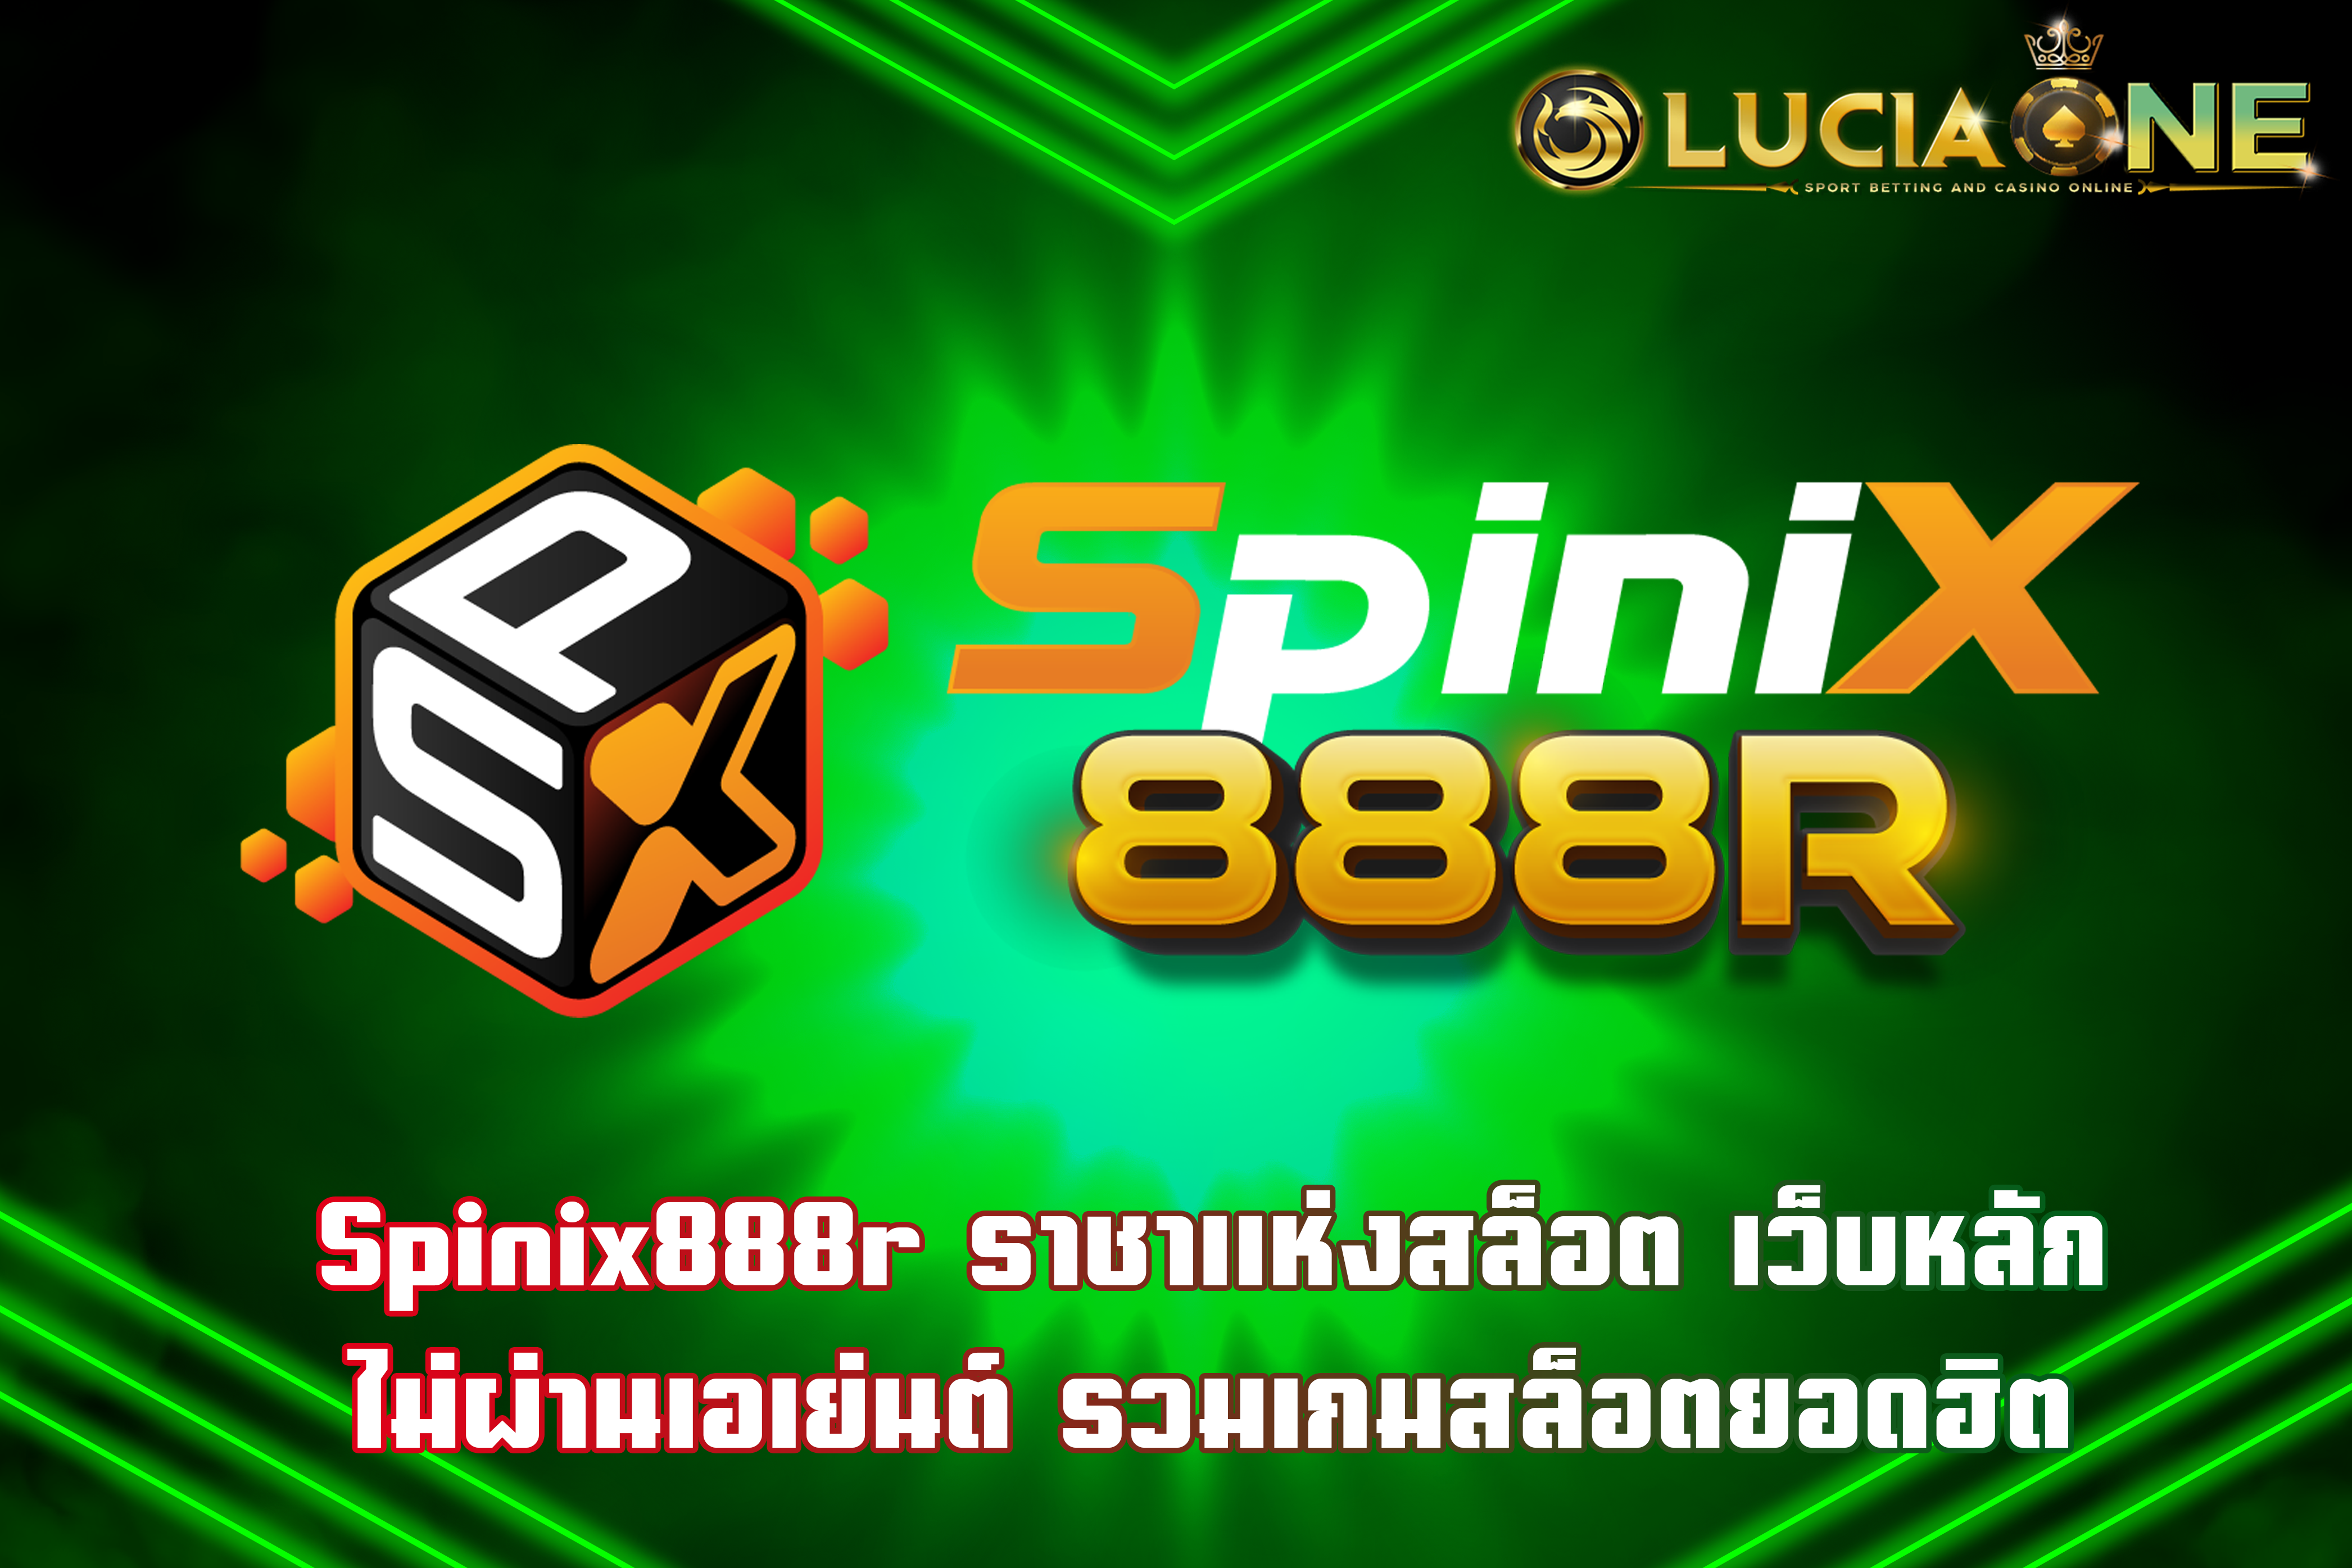 Spinix888r ราชาแห่งสล็อต เว็บหลัก ไม่ผ่านเอเย่นต์ รวมเกมสล็อตยอดฮิต